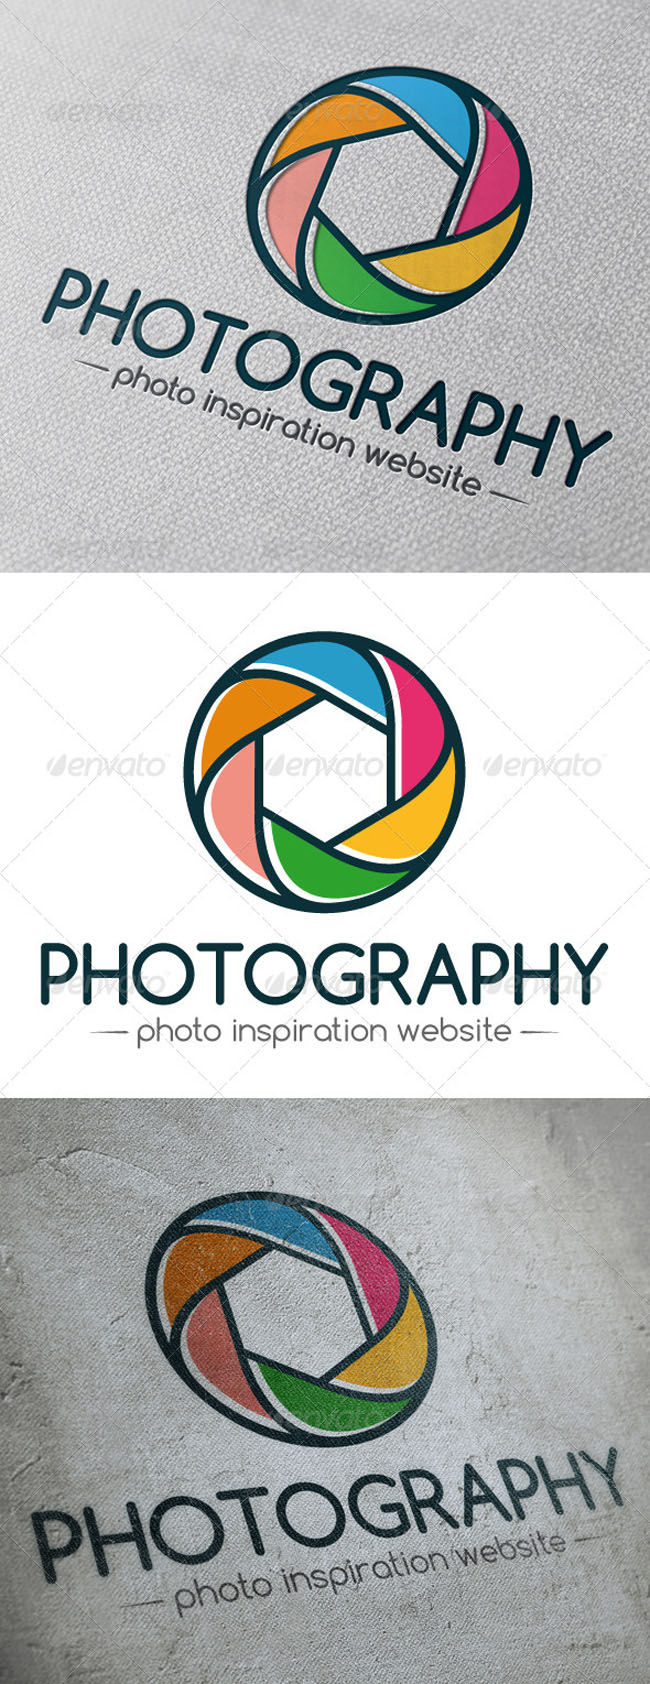 Photography Logo Templates Photoshop